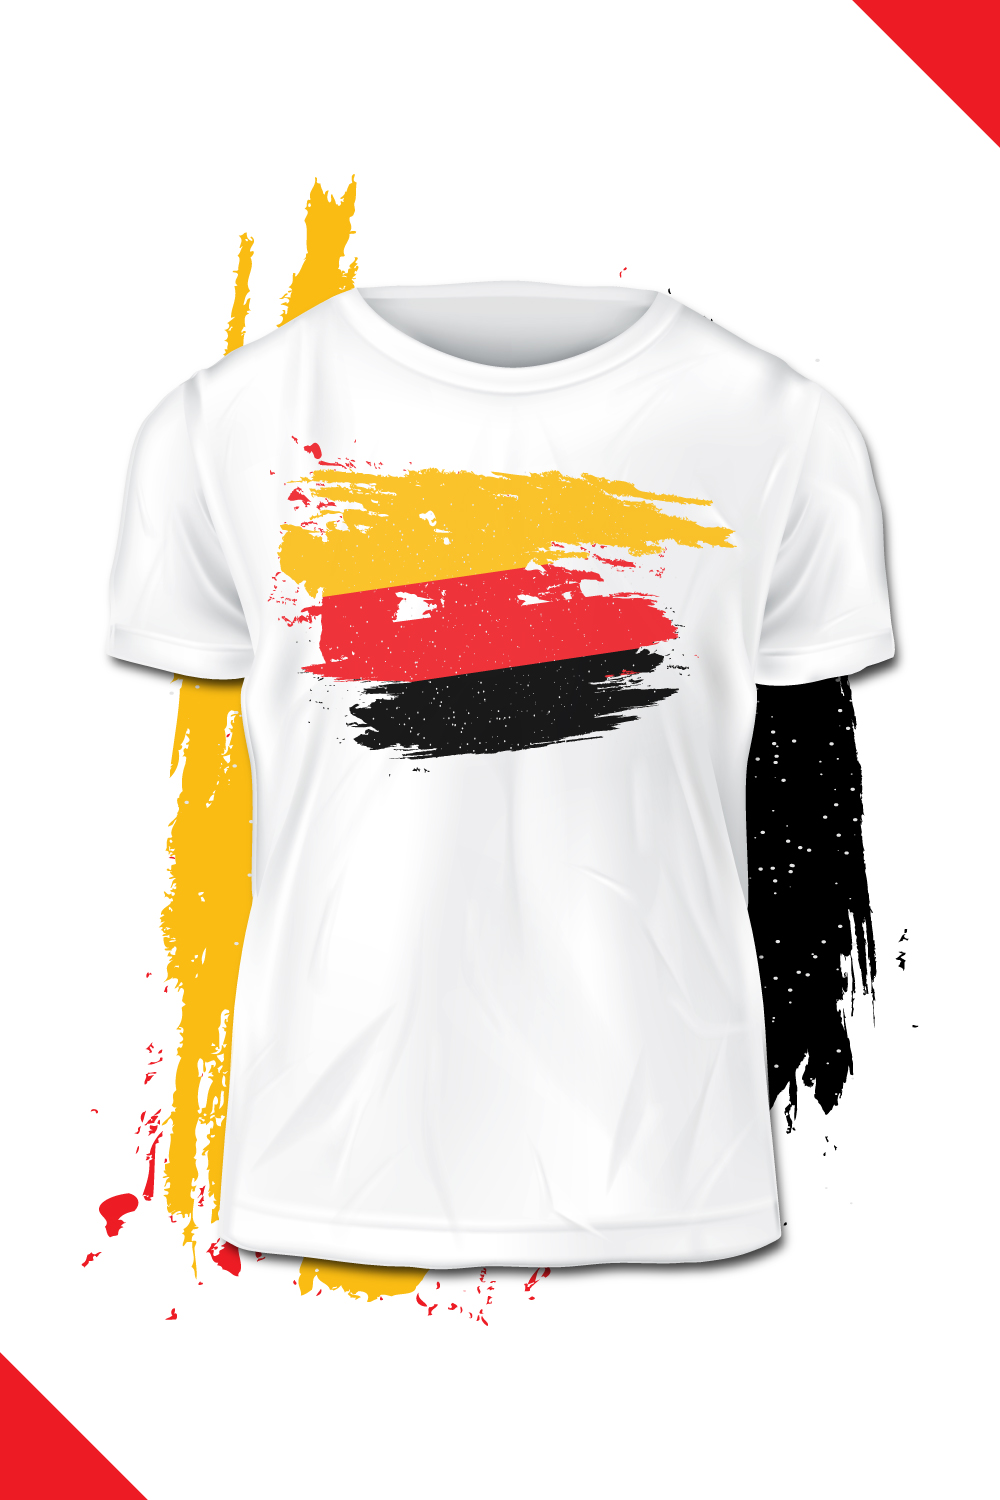 Germany Brush T-shirt design pinterest preview image.